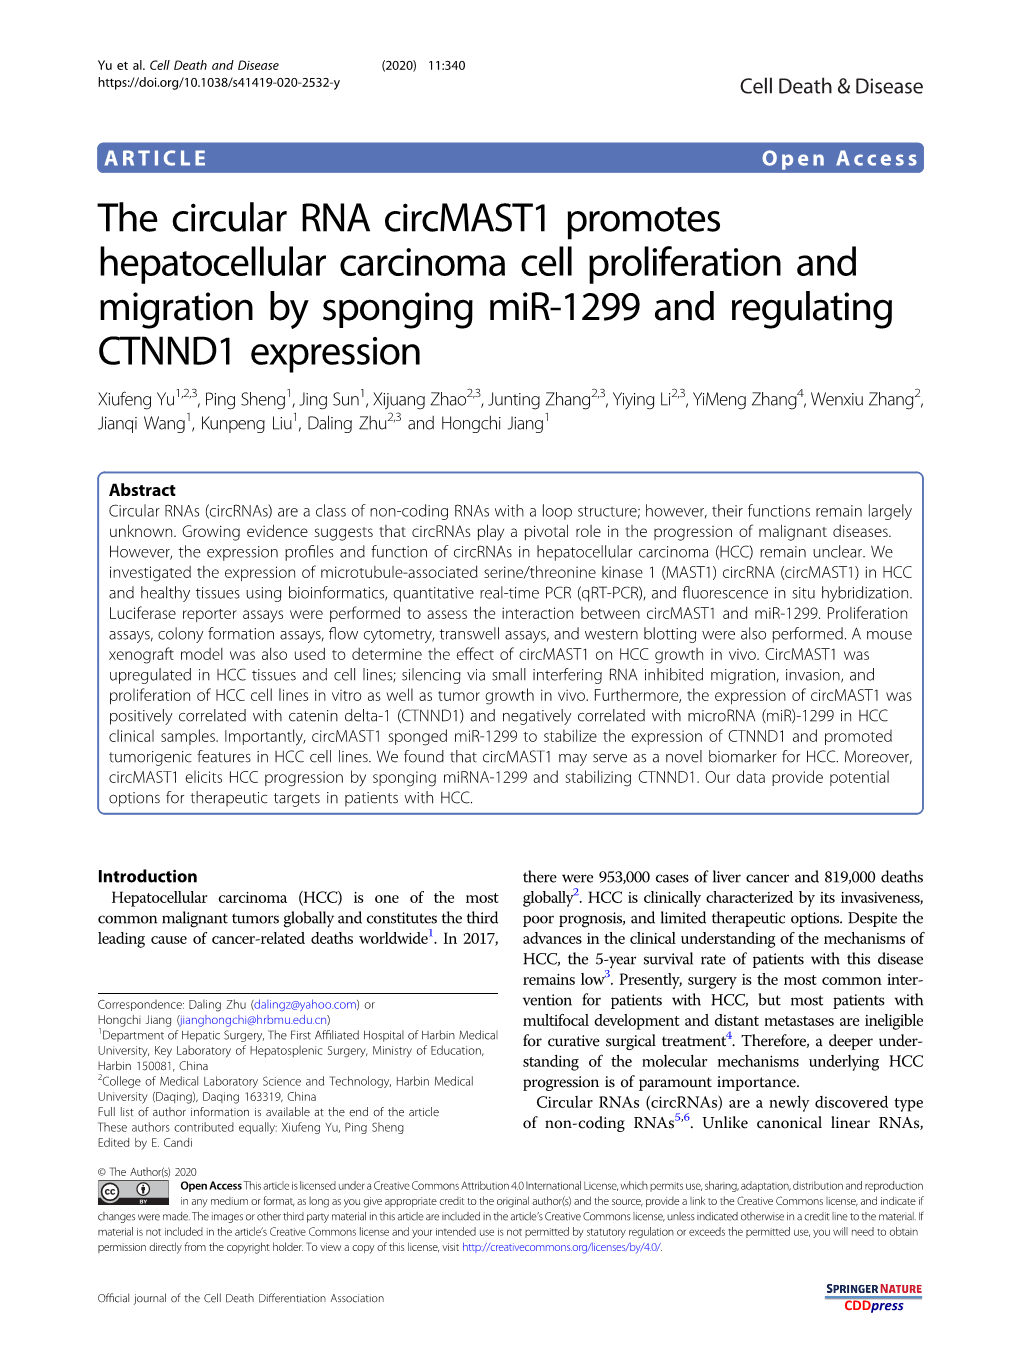 The Circular RNA Circmast1 Promotes Hepatocellular Carcinoma Cell